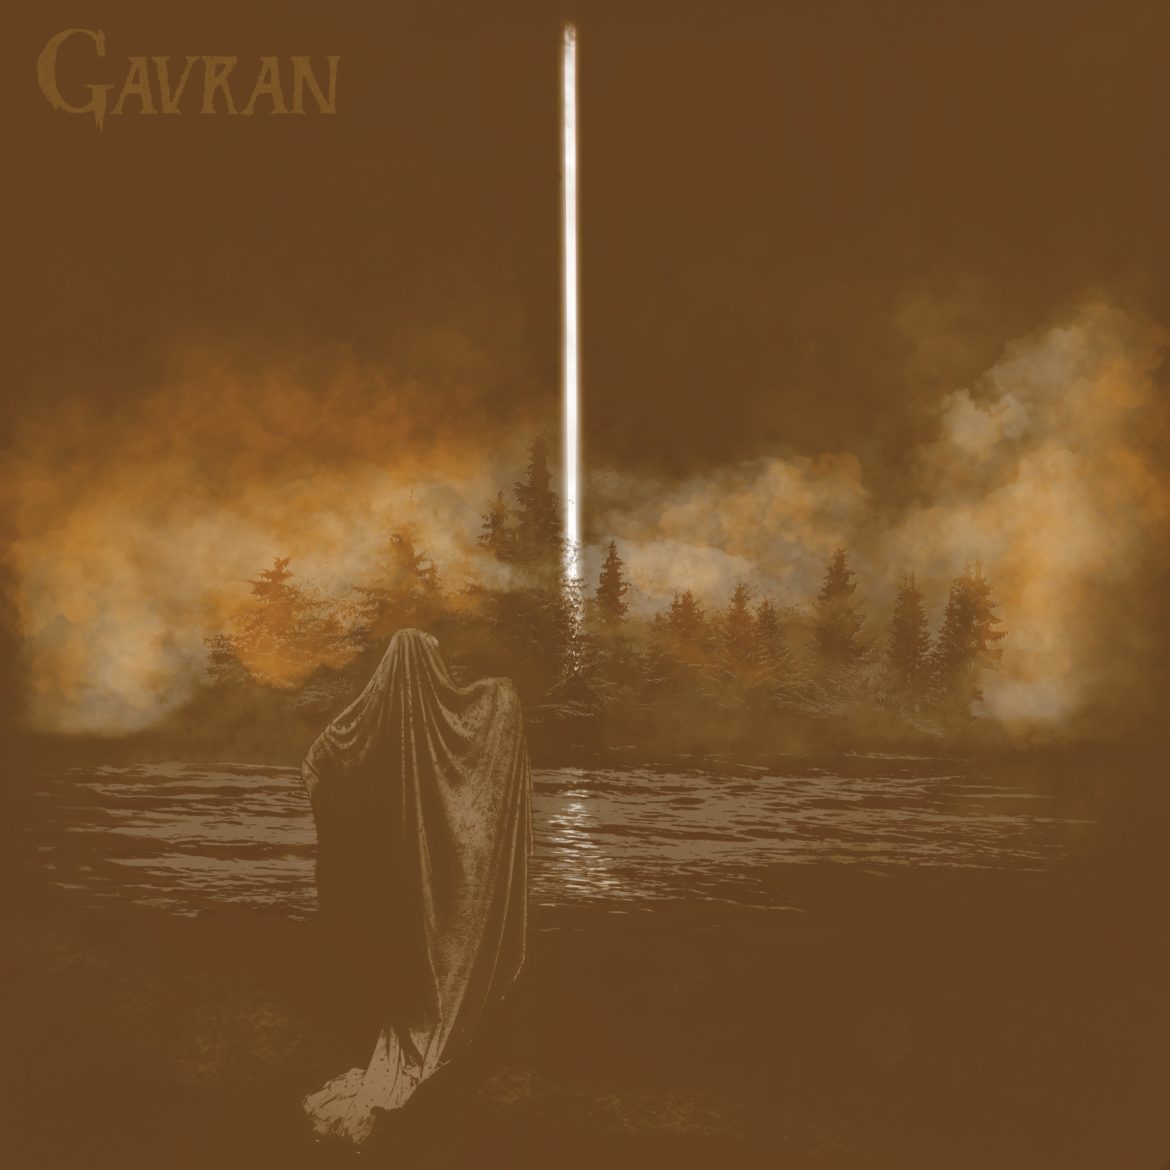 Gavran - Indistinct Beacon